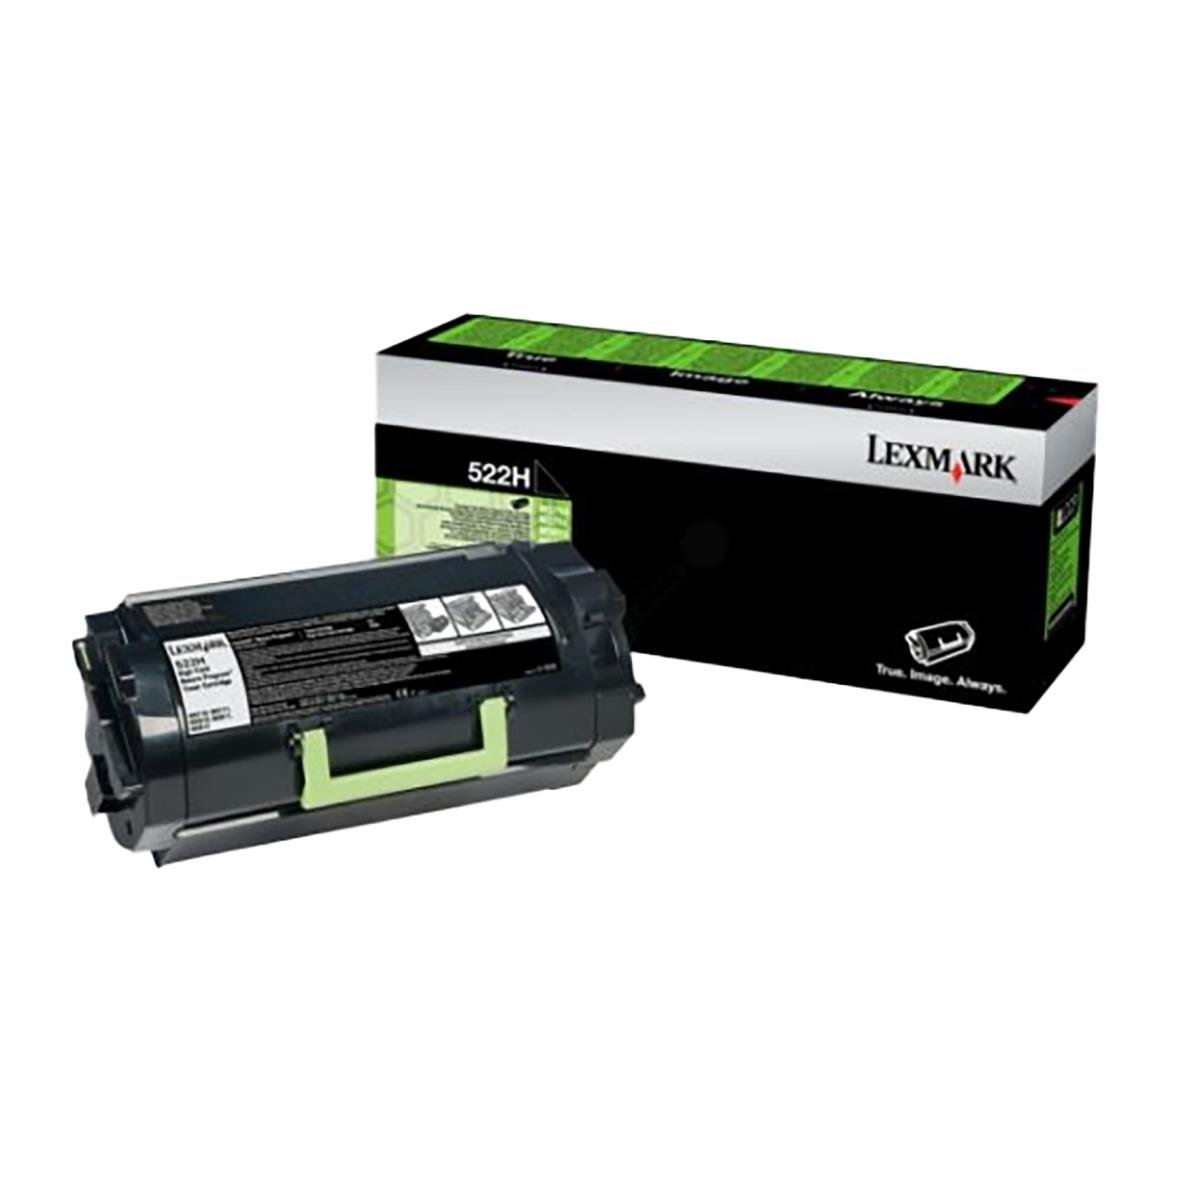 Lasertoner Lexmark 522H 25000 Sidor 52D2H00 Svart 27042535